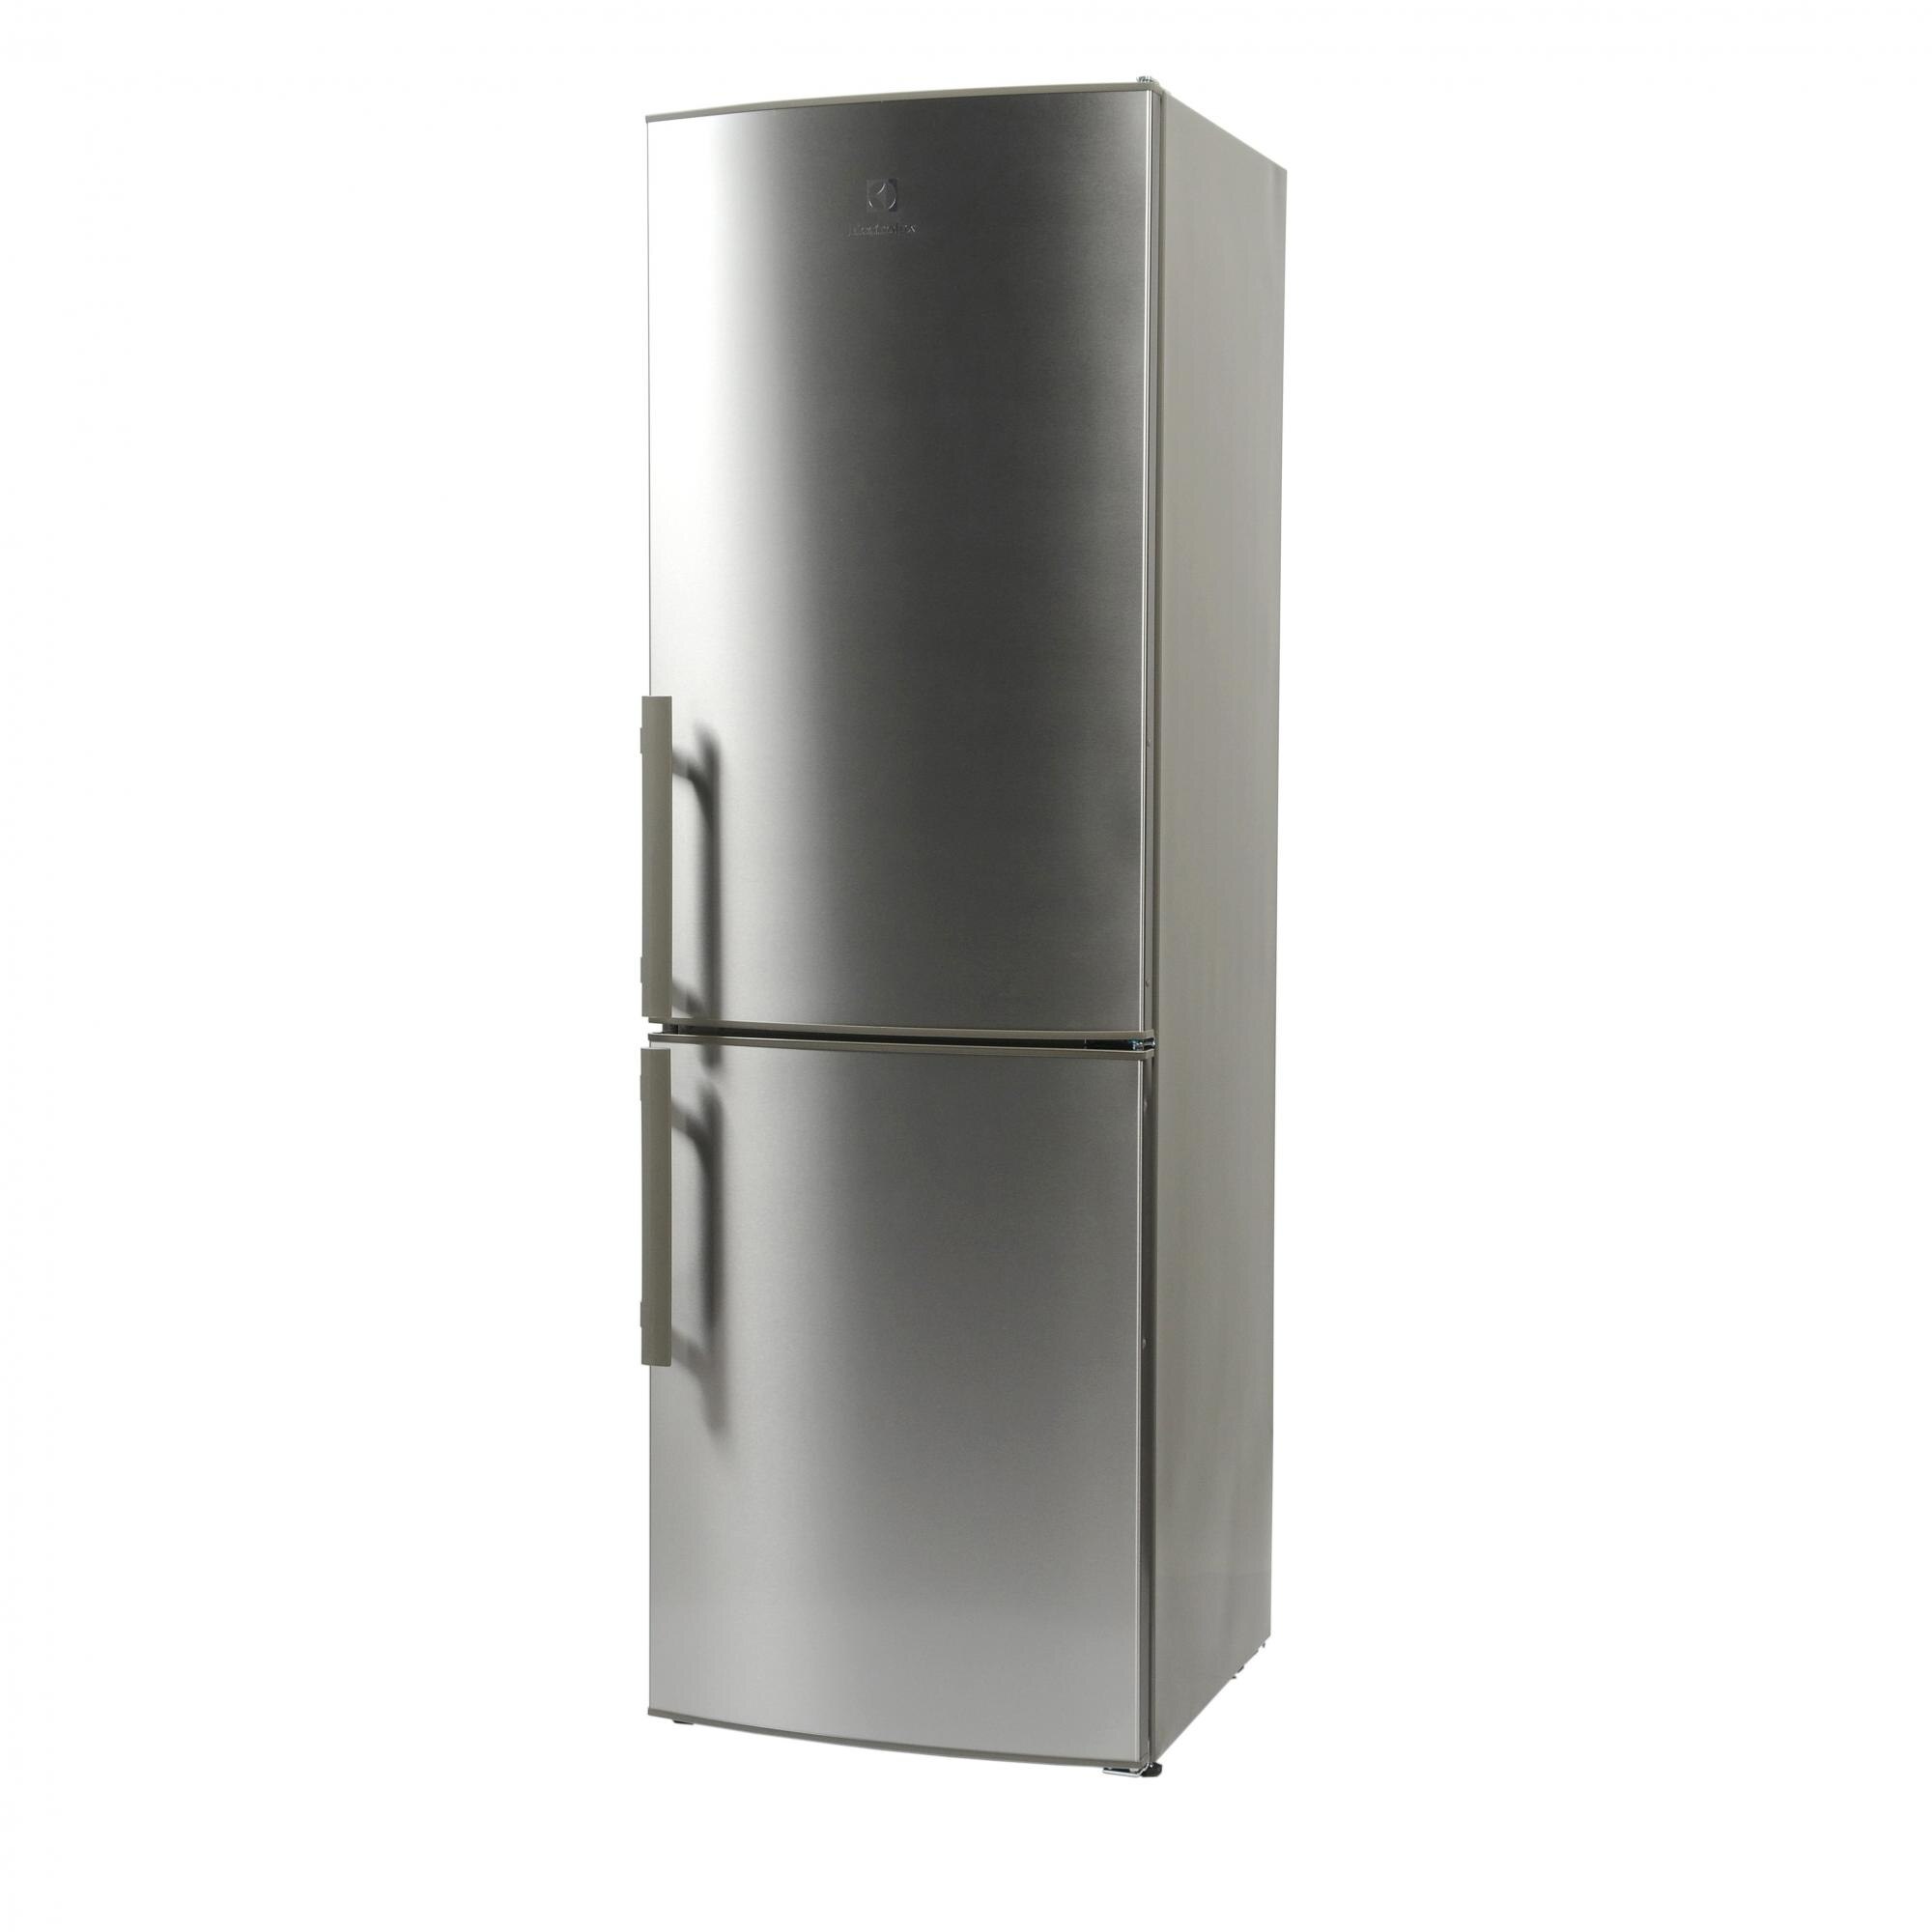 Хладилник Electrolux EN3601MOX с обем от 337 л.